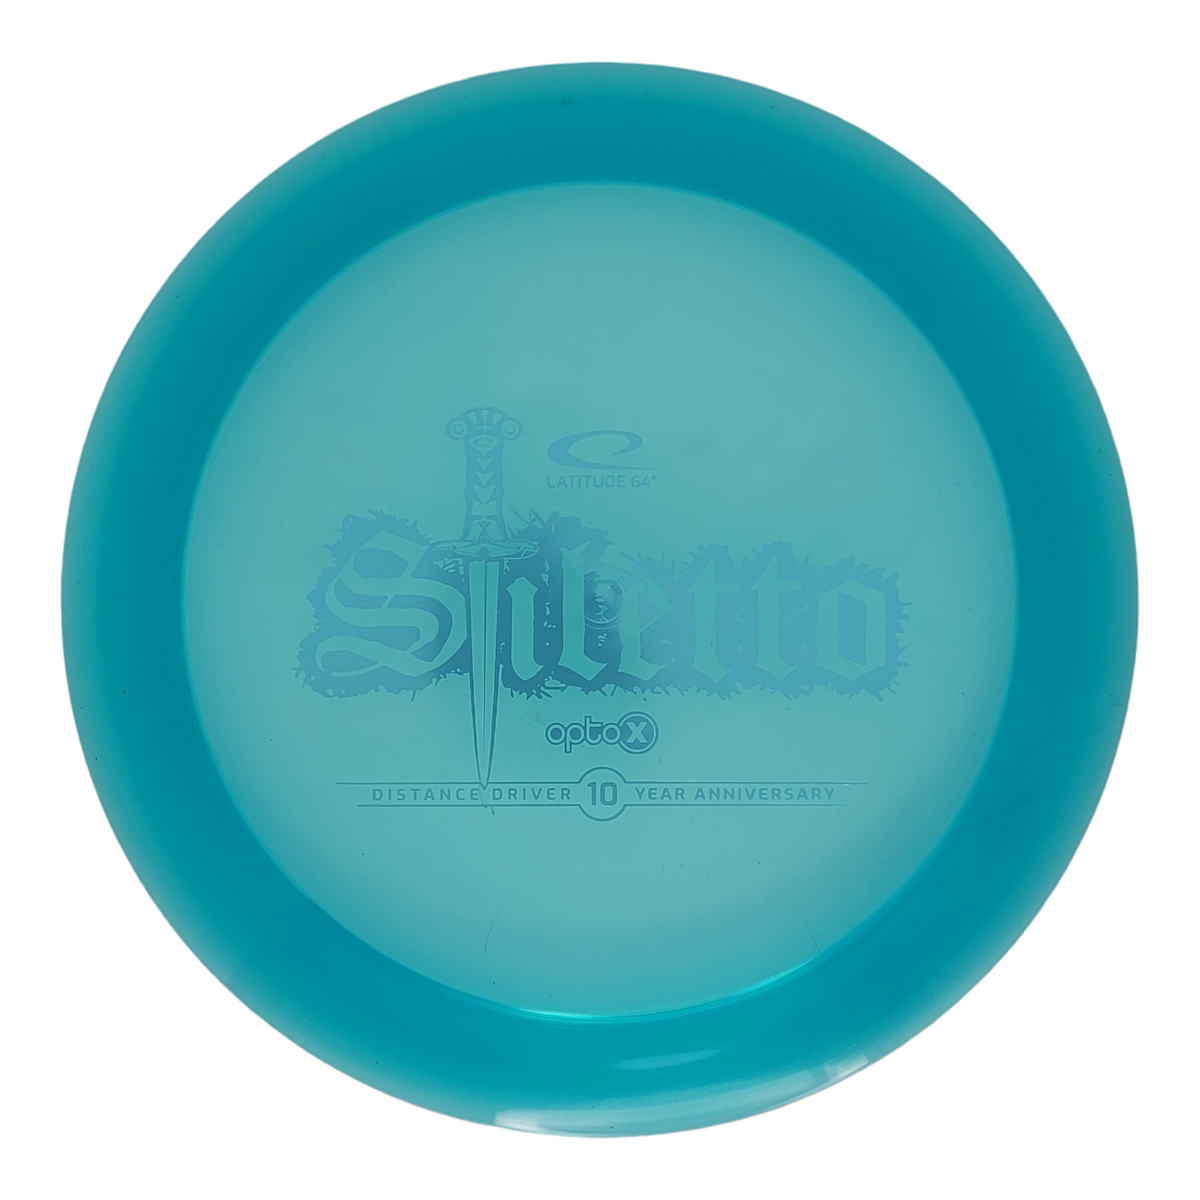 Latitude 64 Opto X Stiletto - 10 Year Anniversary